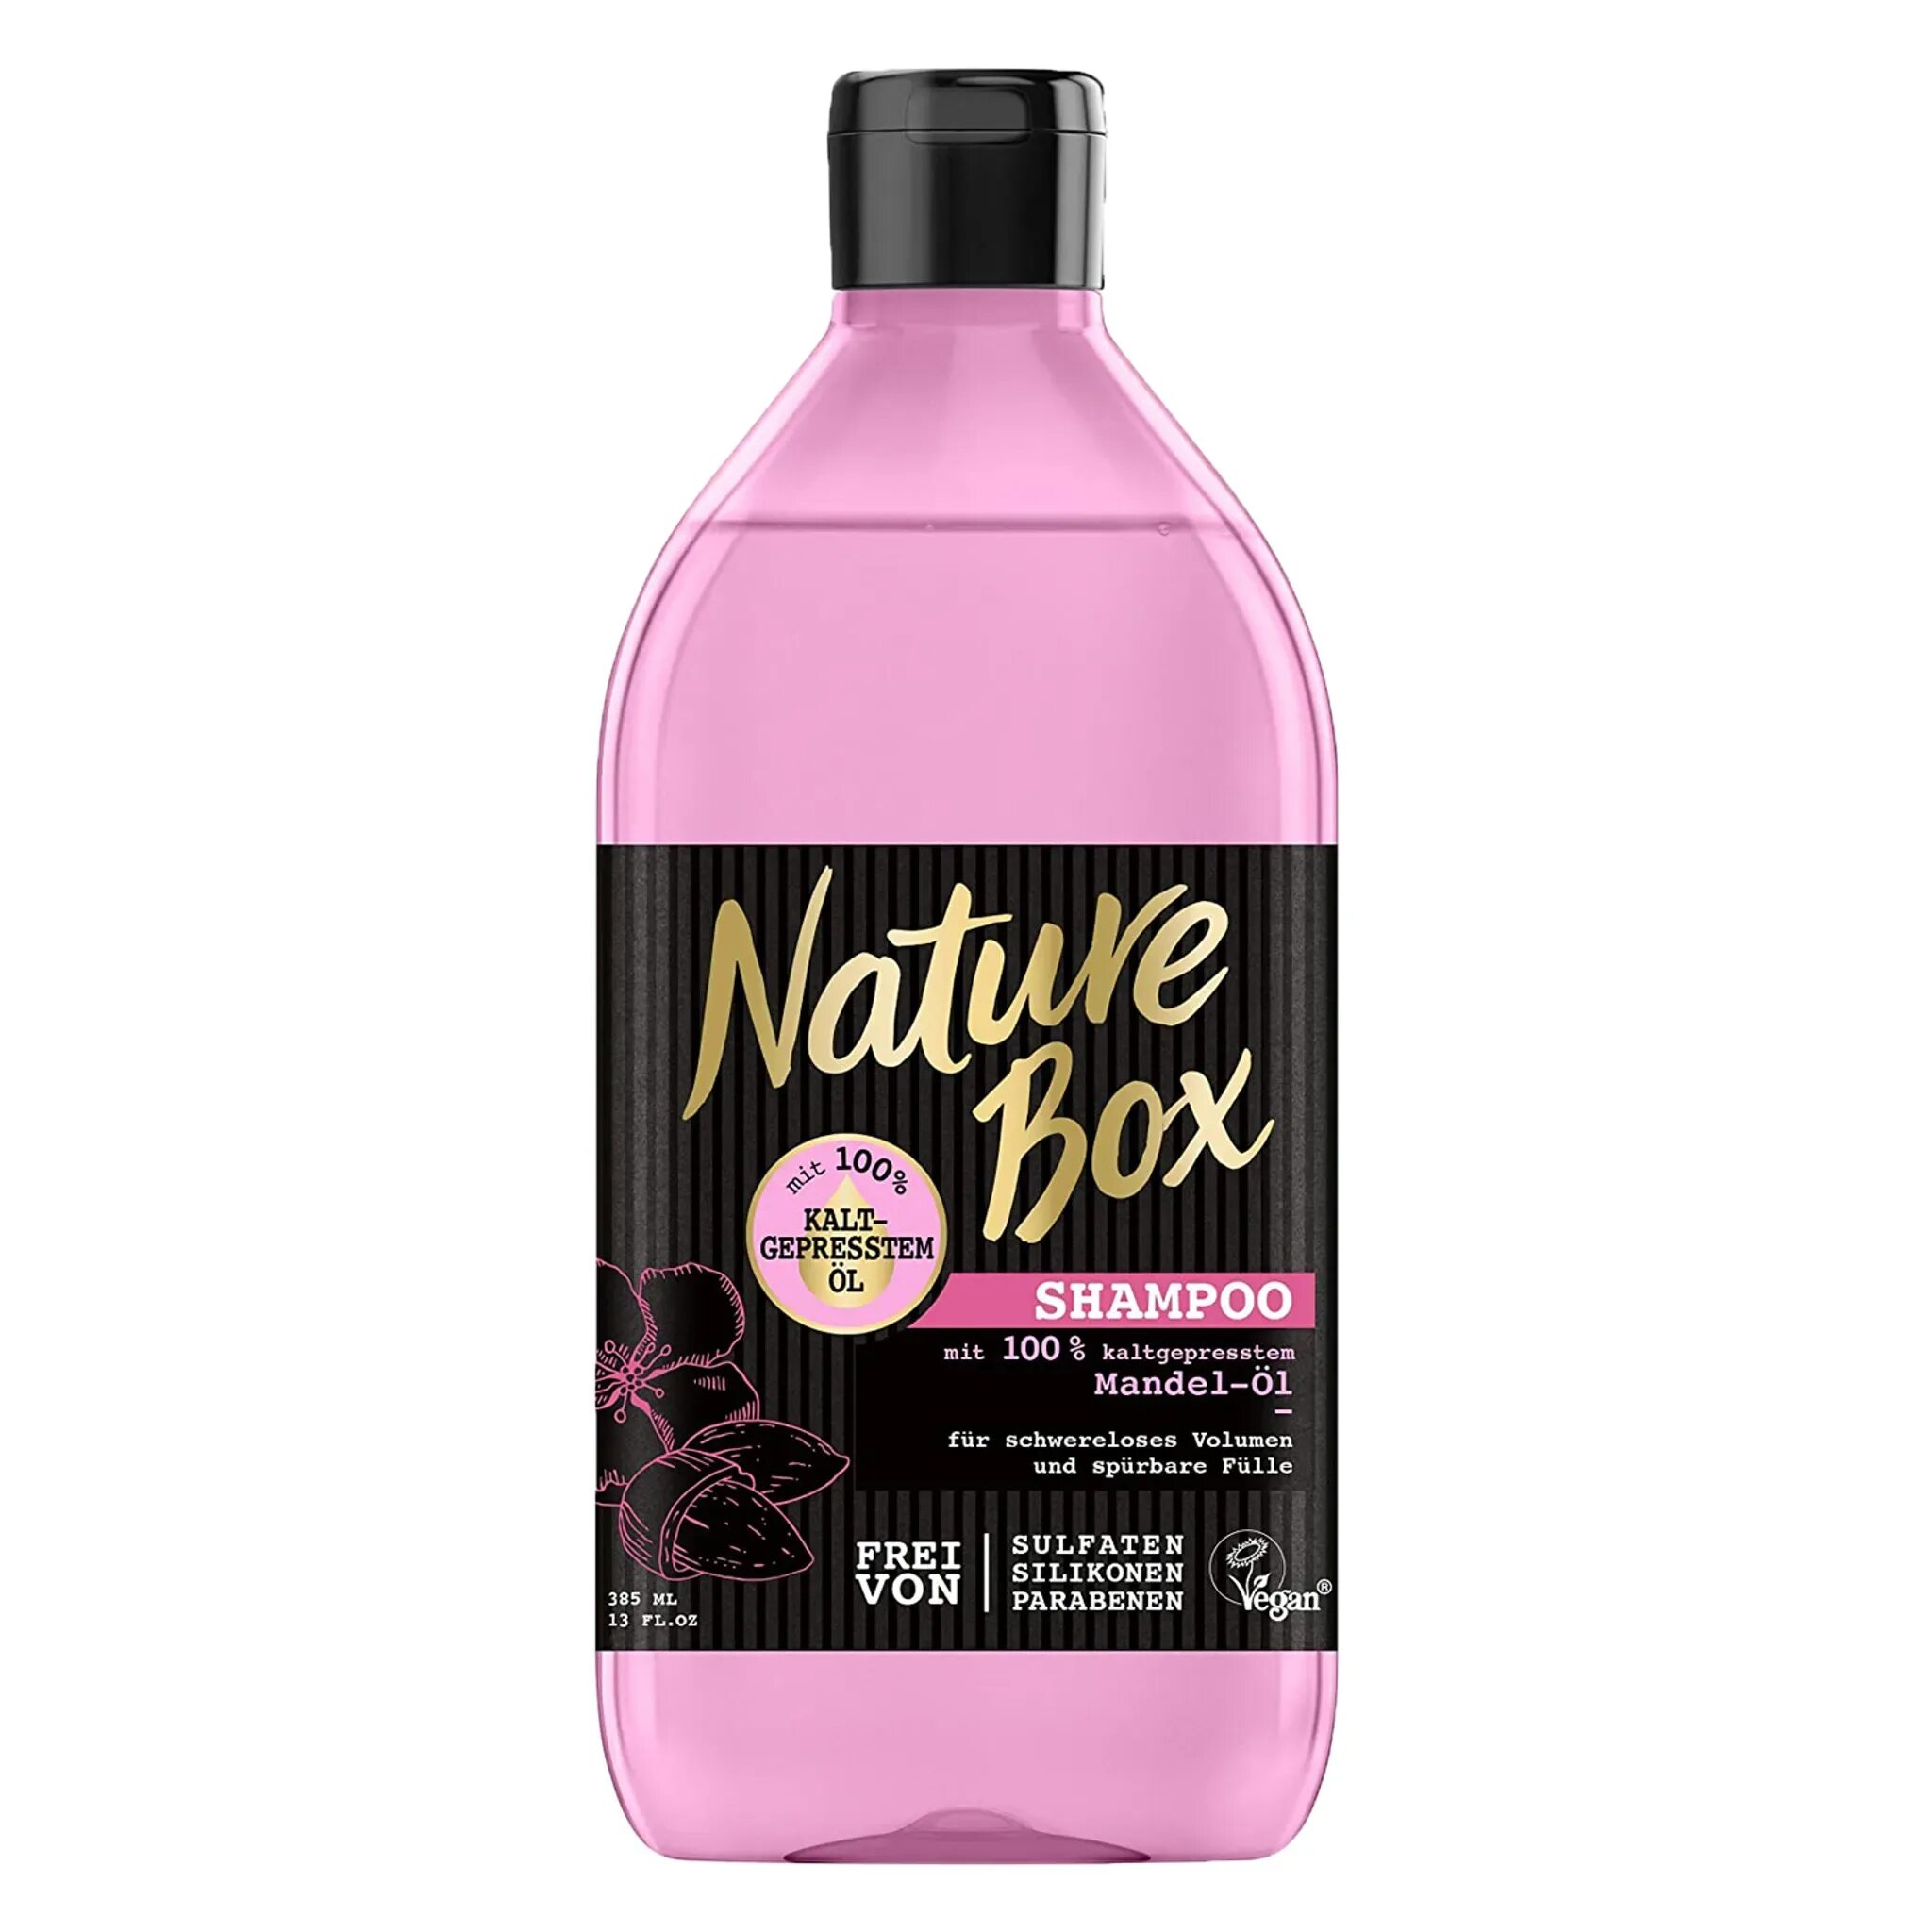 Nature Box шампуни. Шампунь для волос женский с миндалем. Nature Box Avocado Oil Butter 200ml. Shampoo Box Packaging. Natural box